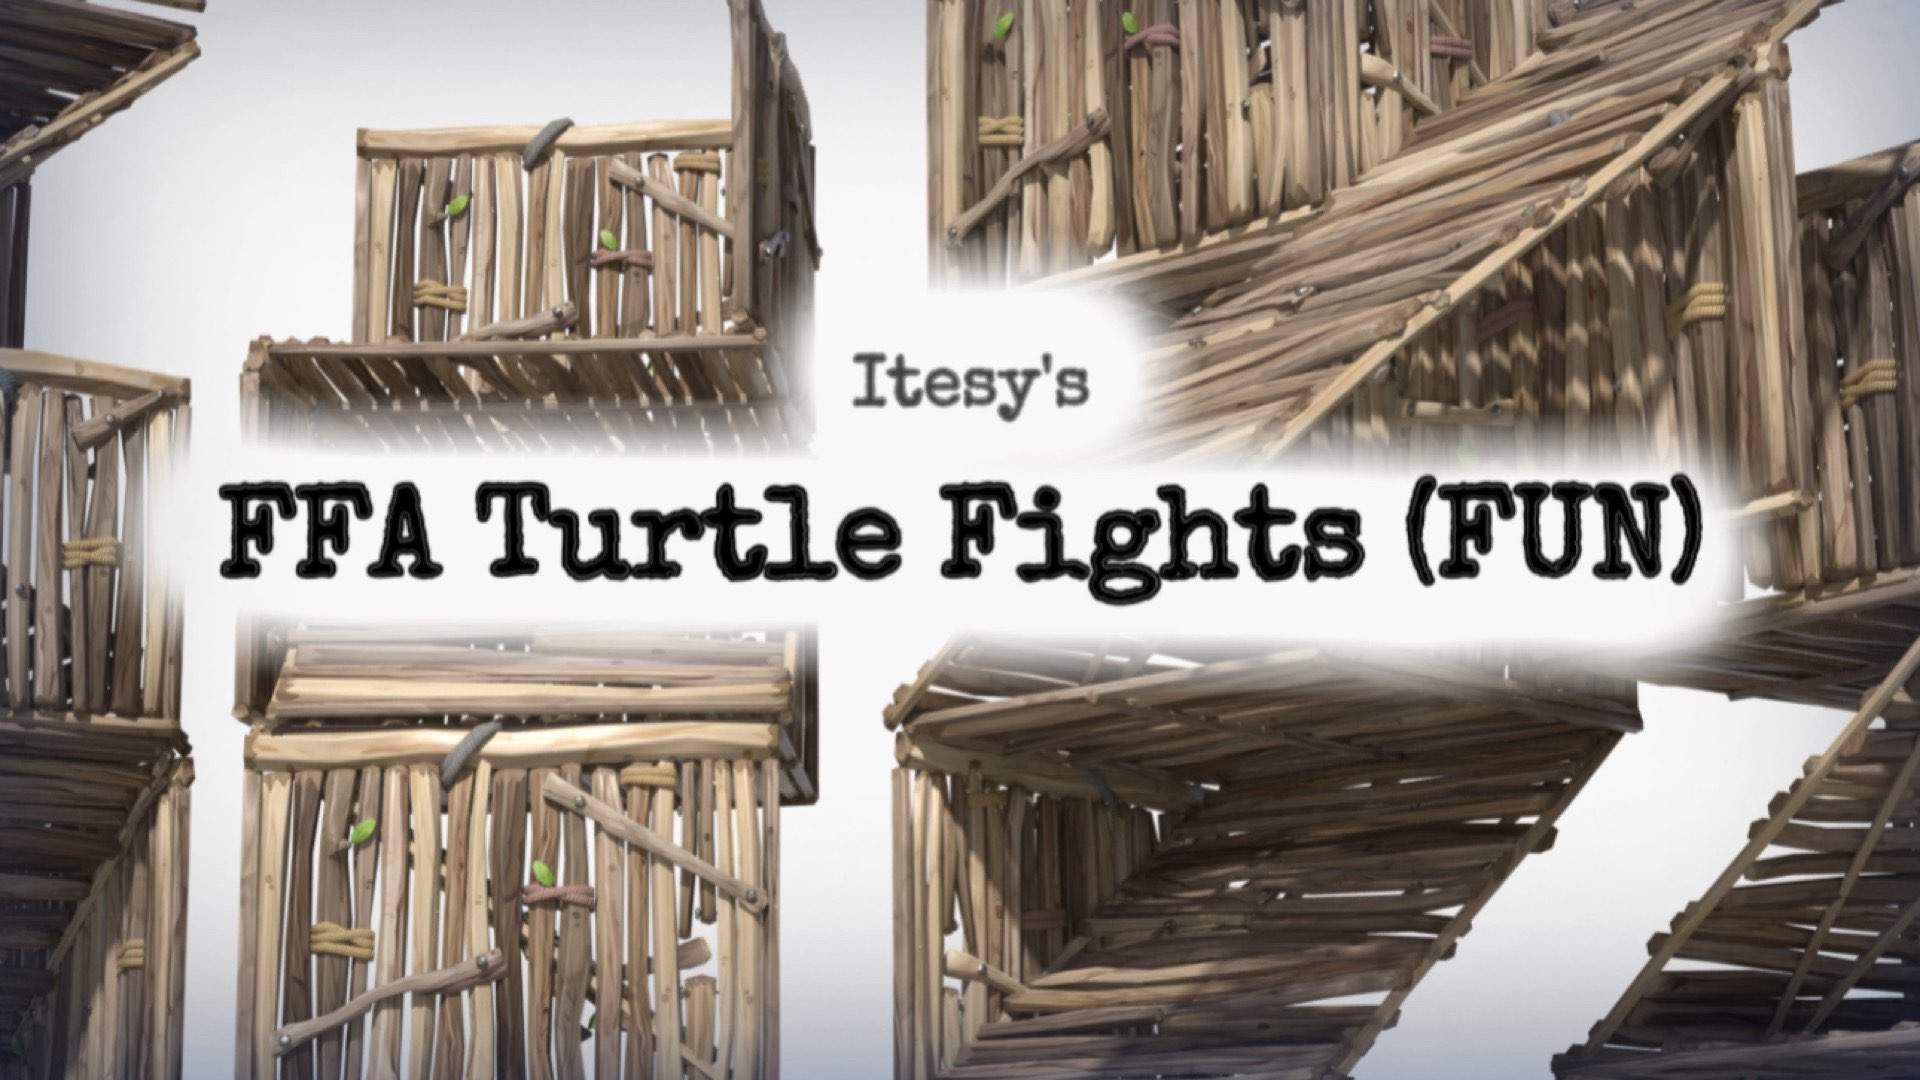 Turtle Fights